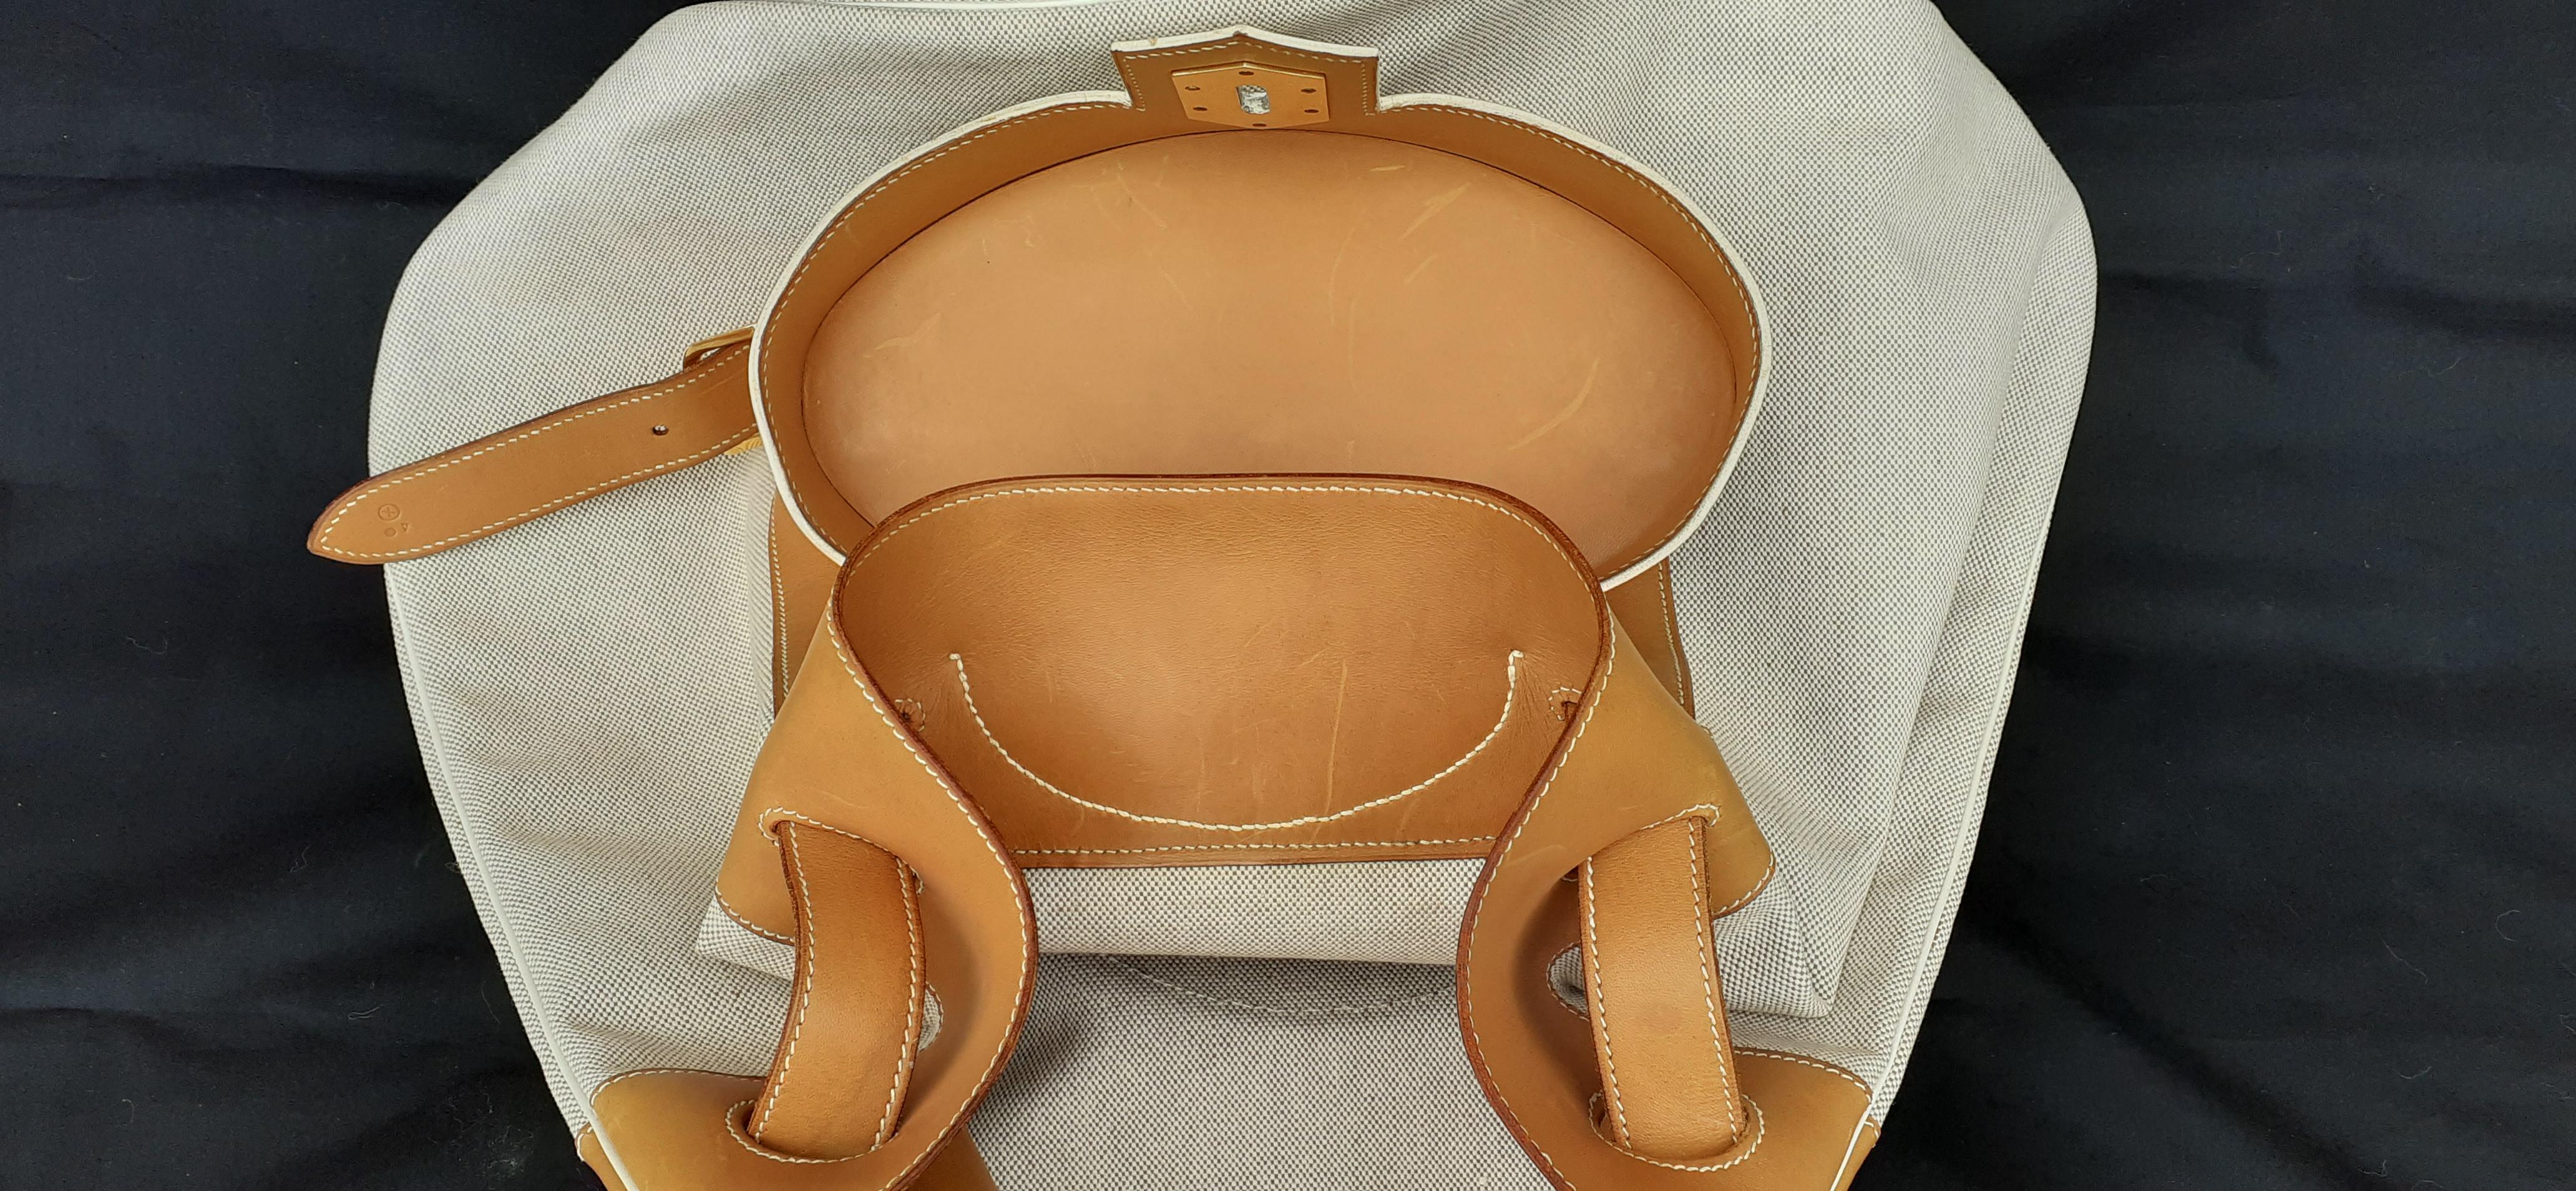 Rare Hermès Vintage Sumac Travel Riding or Picnic Bag Canvas Leather 50 cm For Sale 1